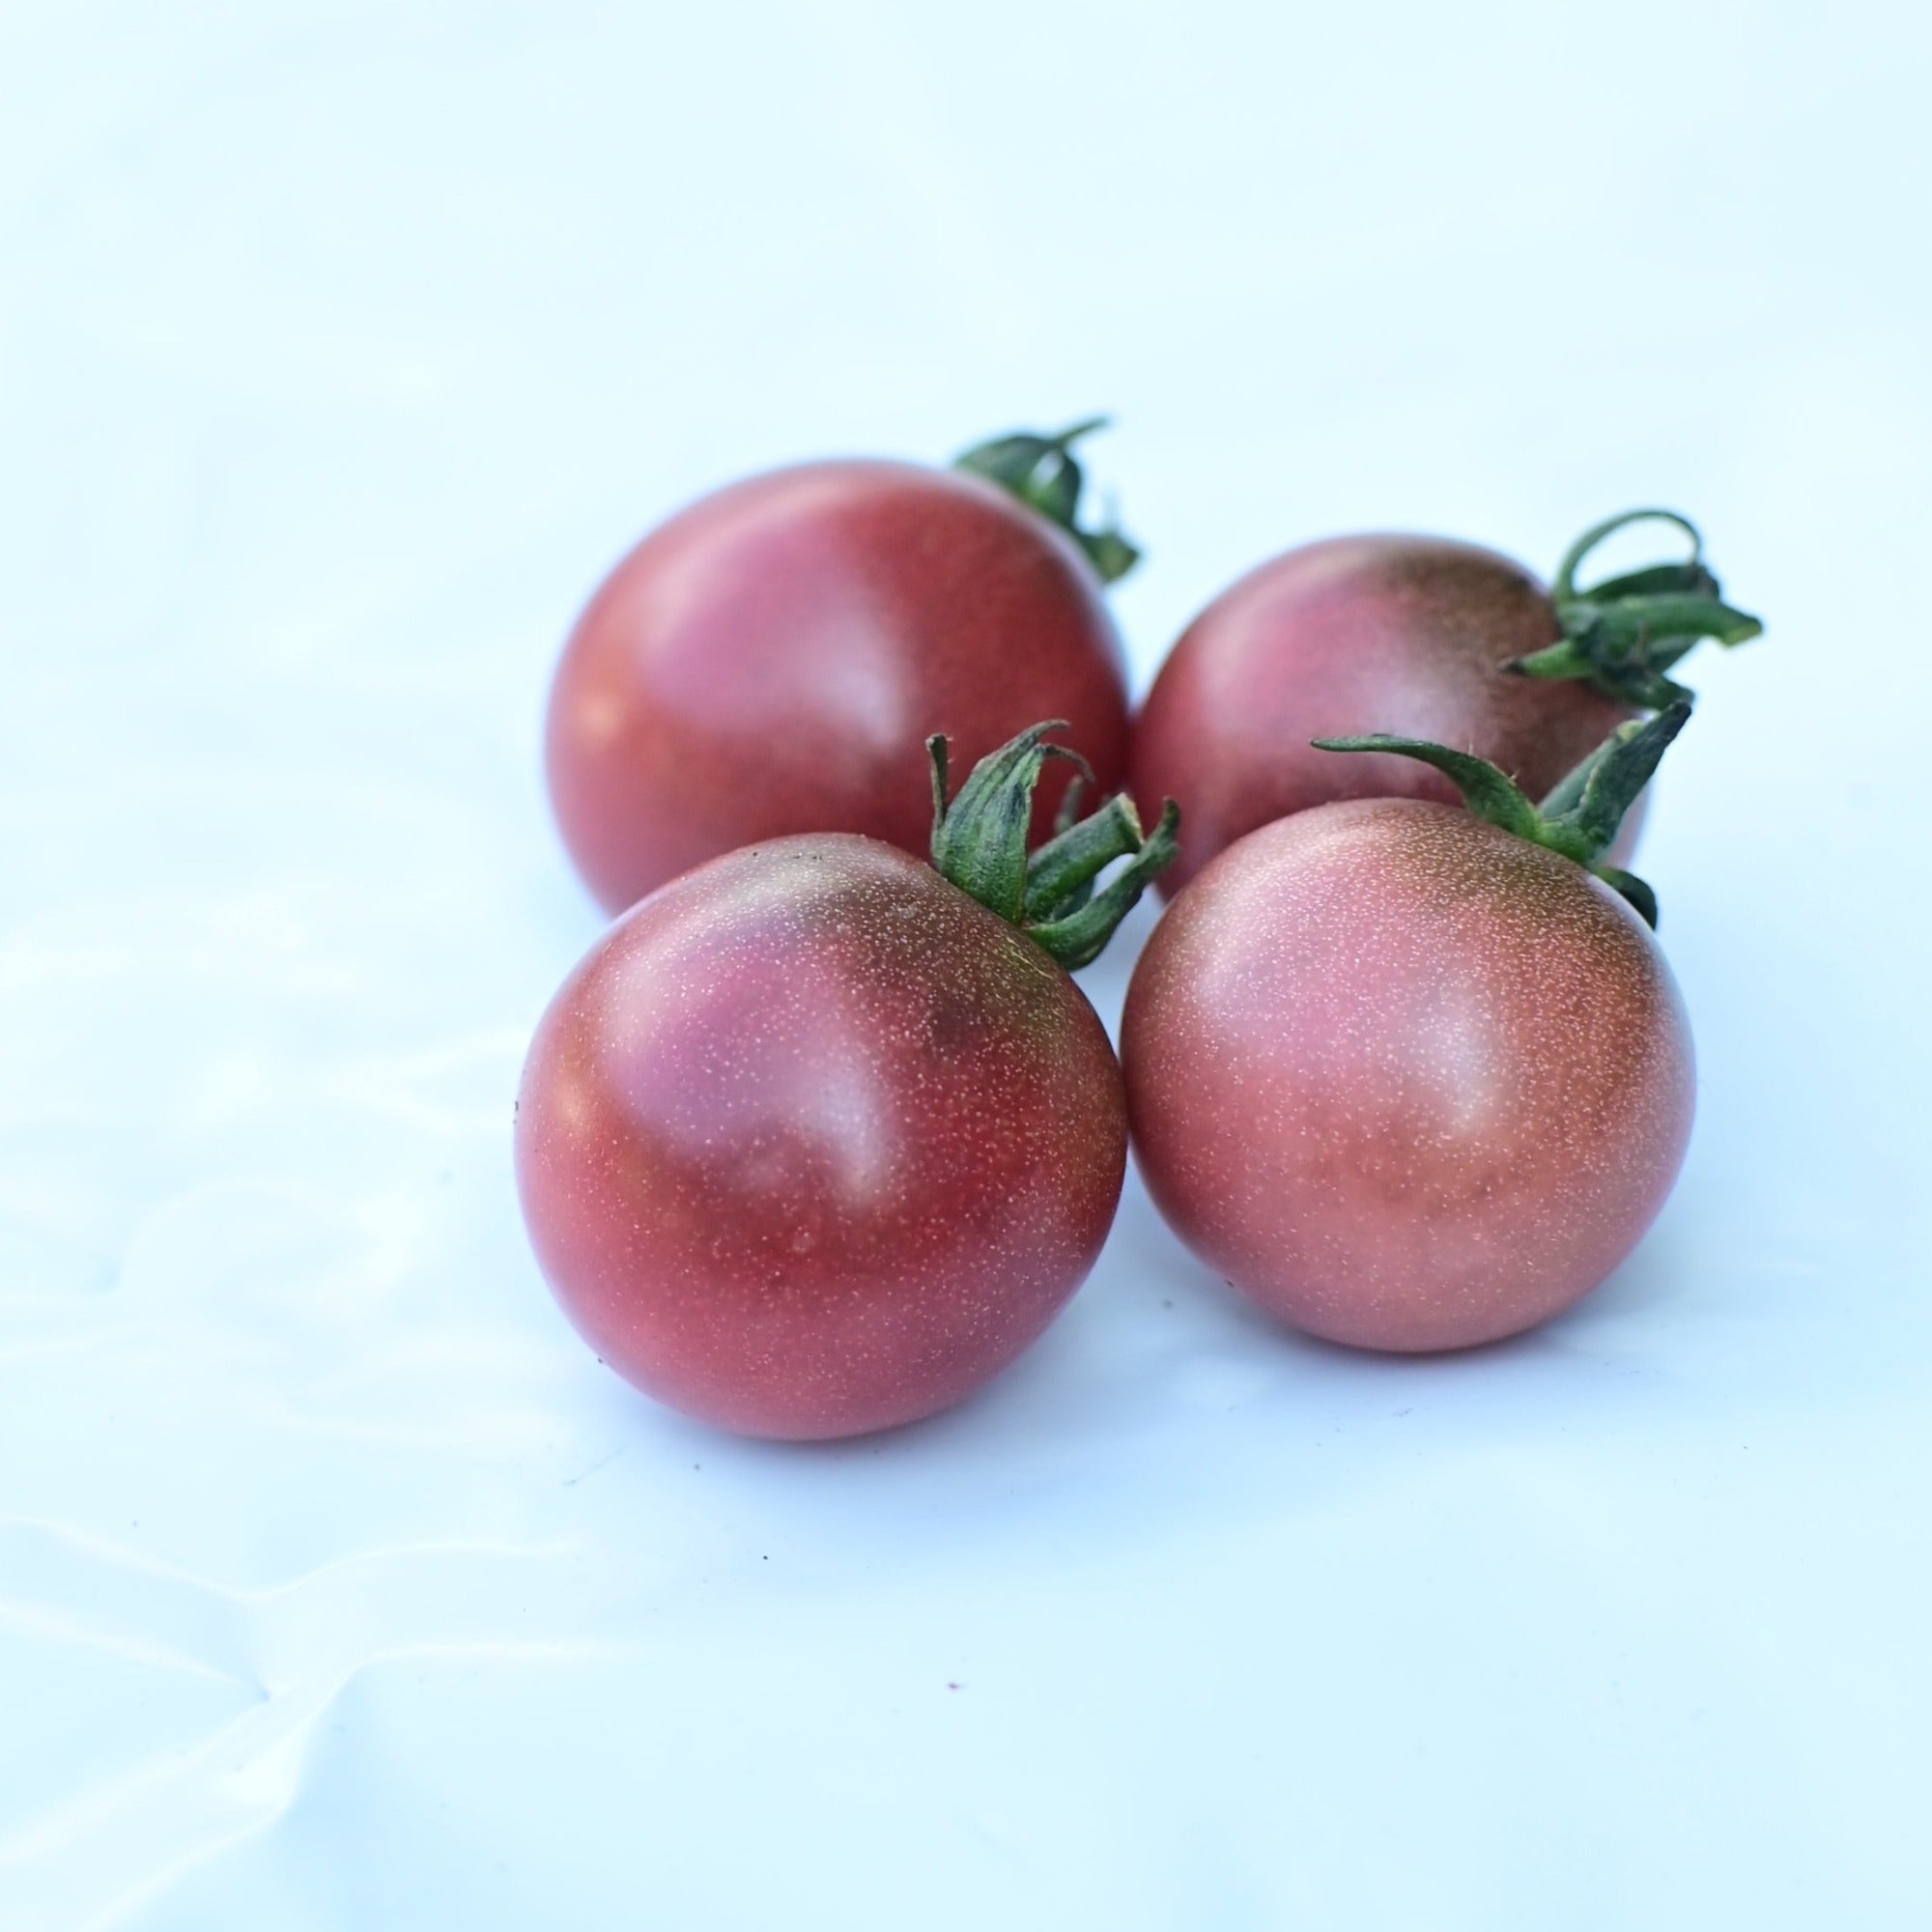 Black Cherry Tomato Improved